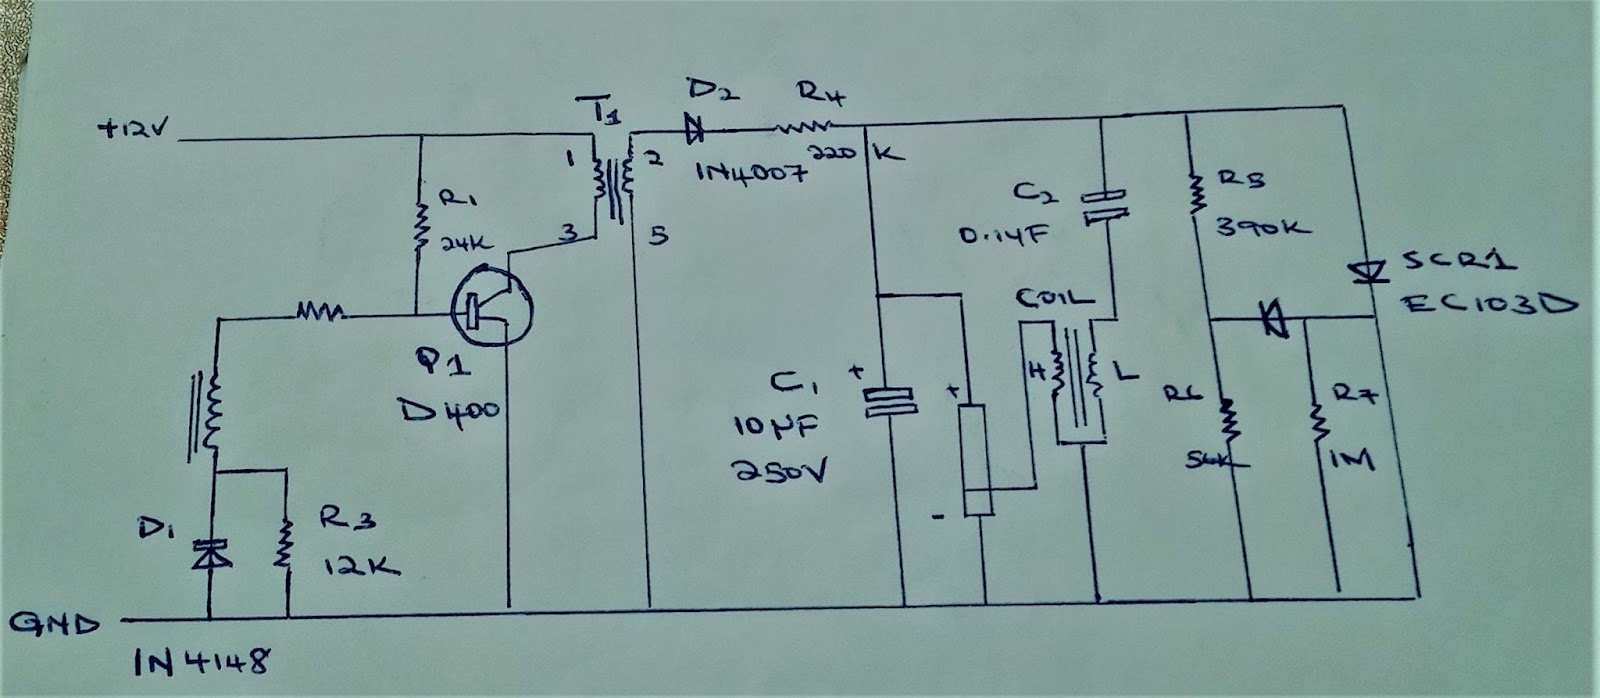 Xenon flash tube circuit: How To Build the Circuit